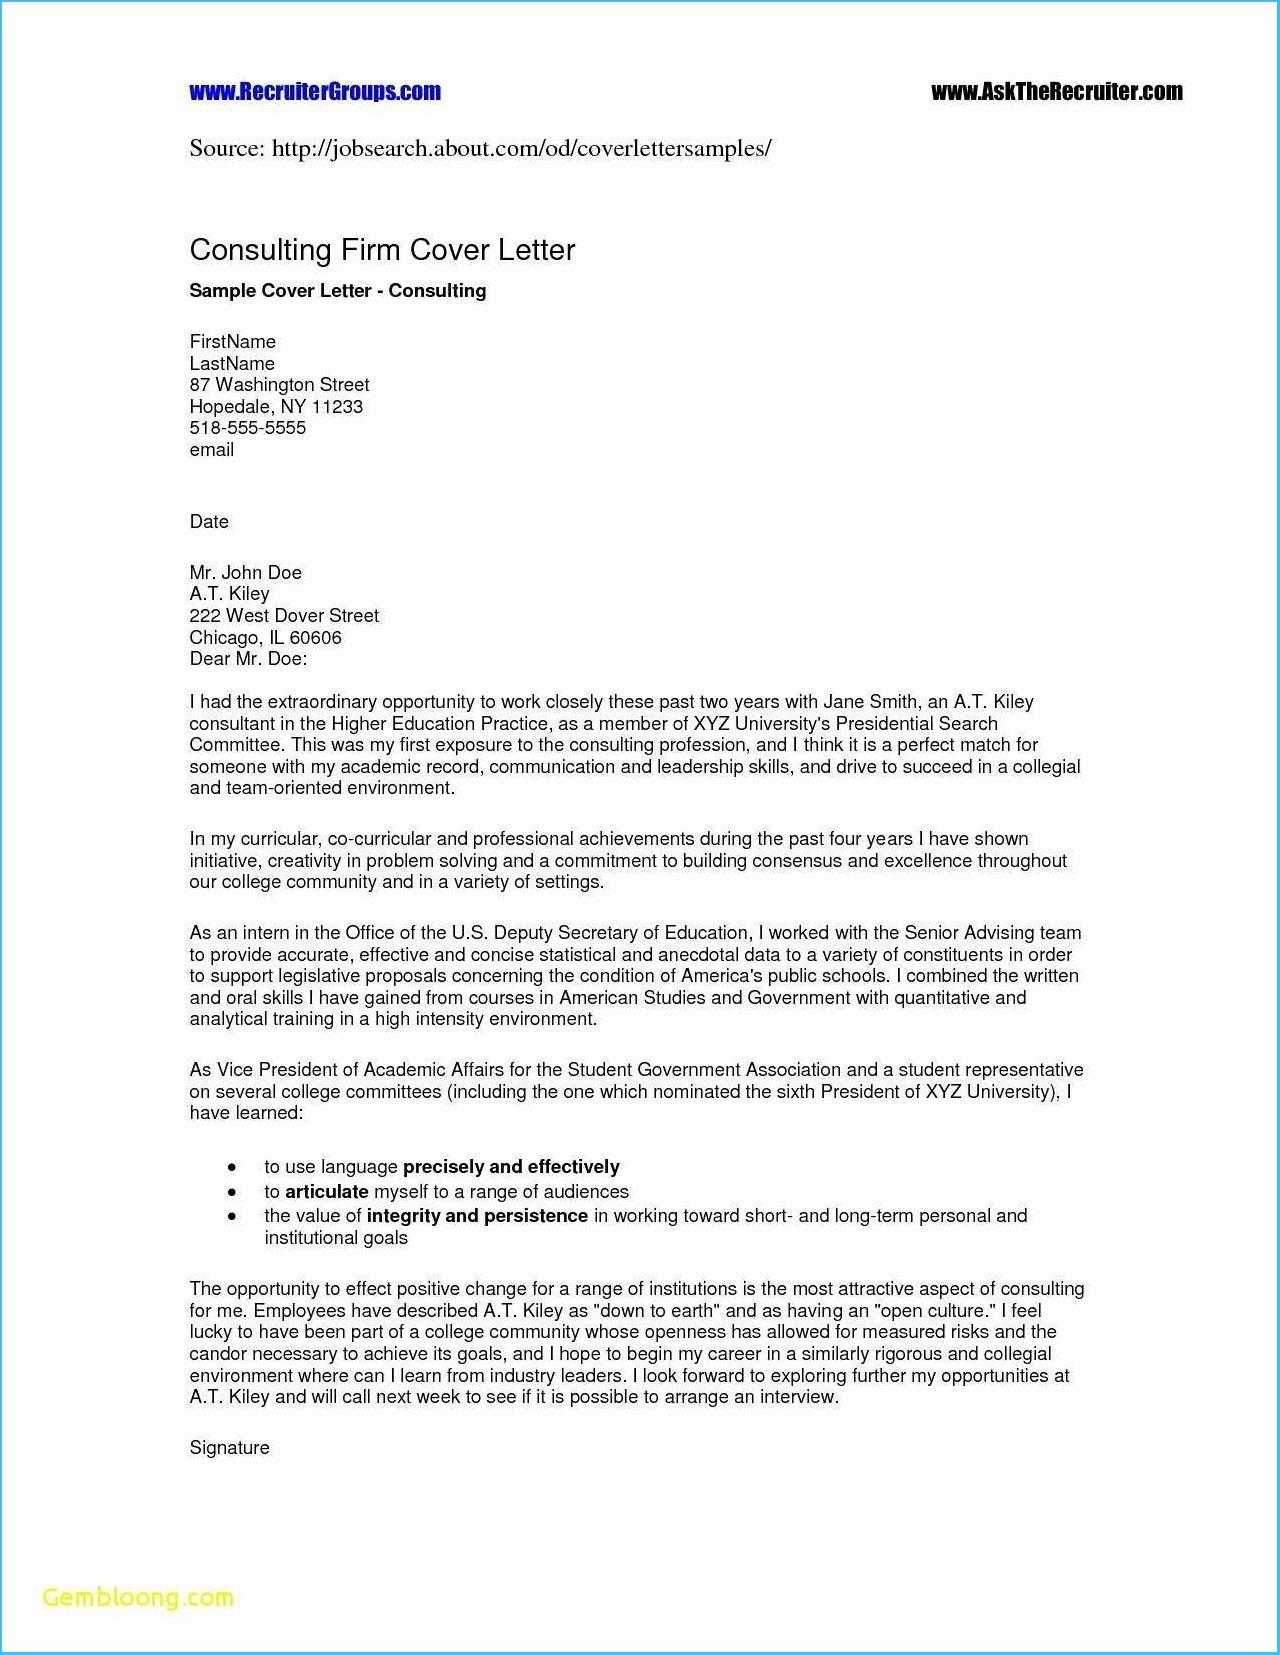 Good Conduct Certificate Template #9468 Regarding Good Conduct Certificate Template